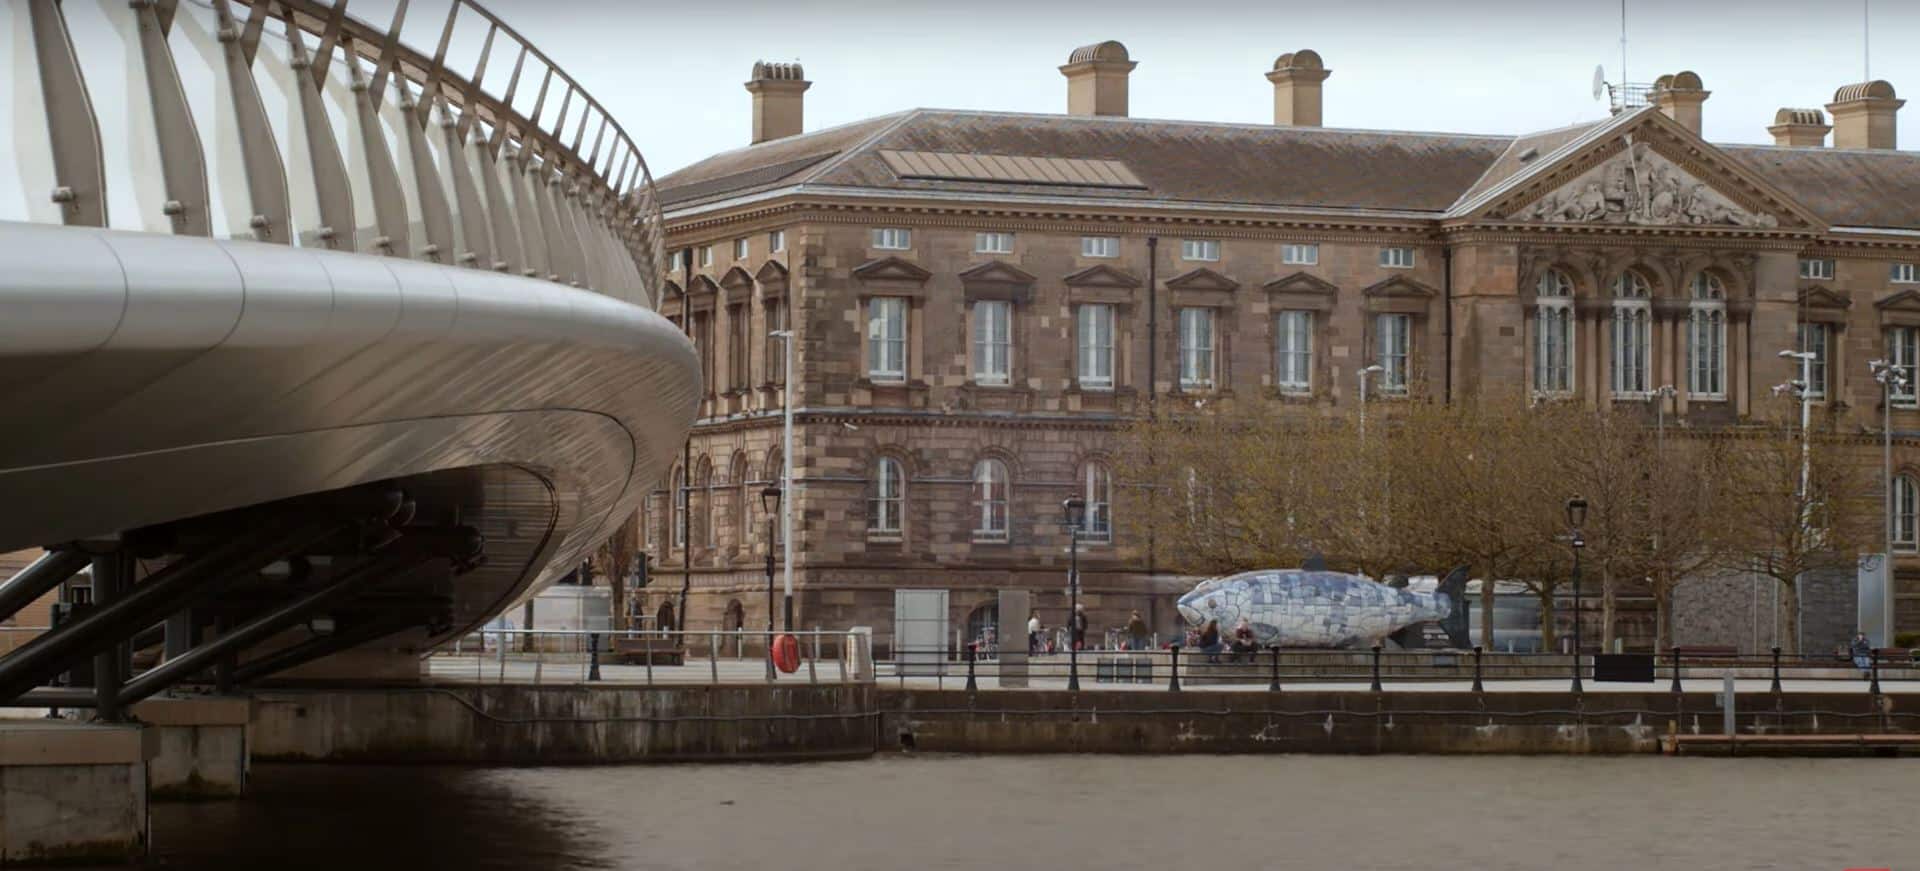 Ireland's Belfast city center- Northern Ireland, Big Fish statue